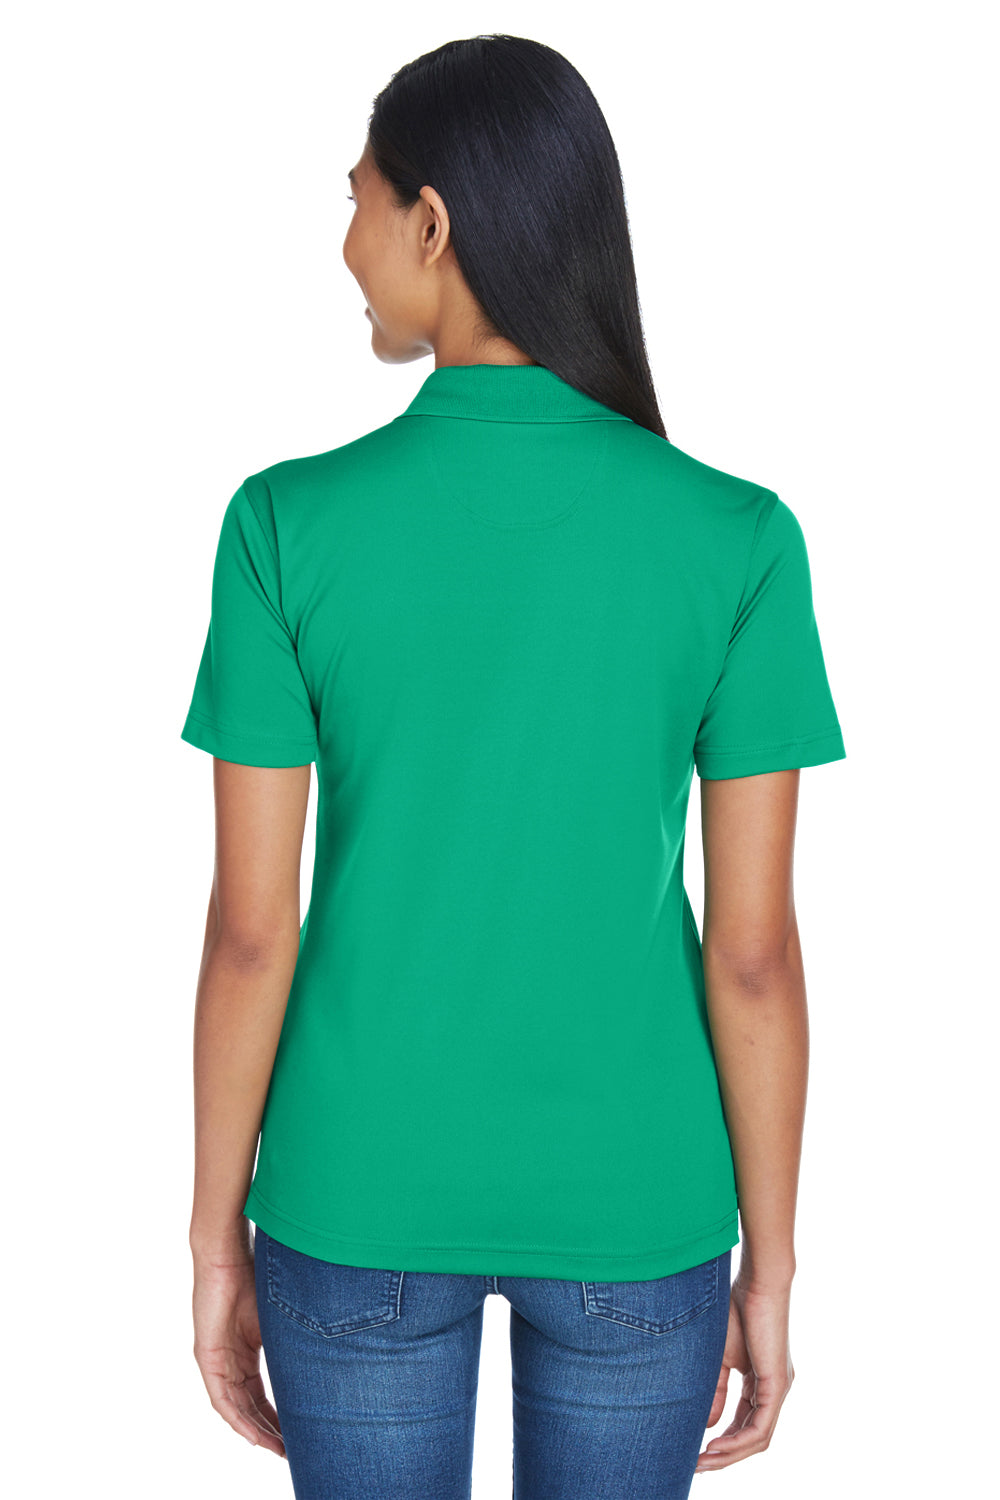 UltraClub 8404 Womens Cool & Dry Moisture Wicking Short Sleeve Polo Shirt Kelly Green Back